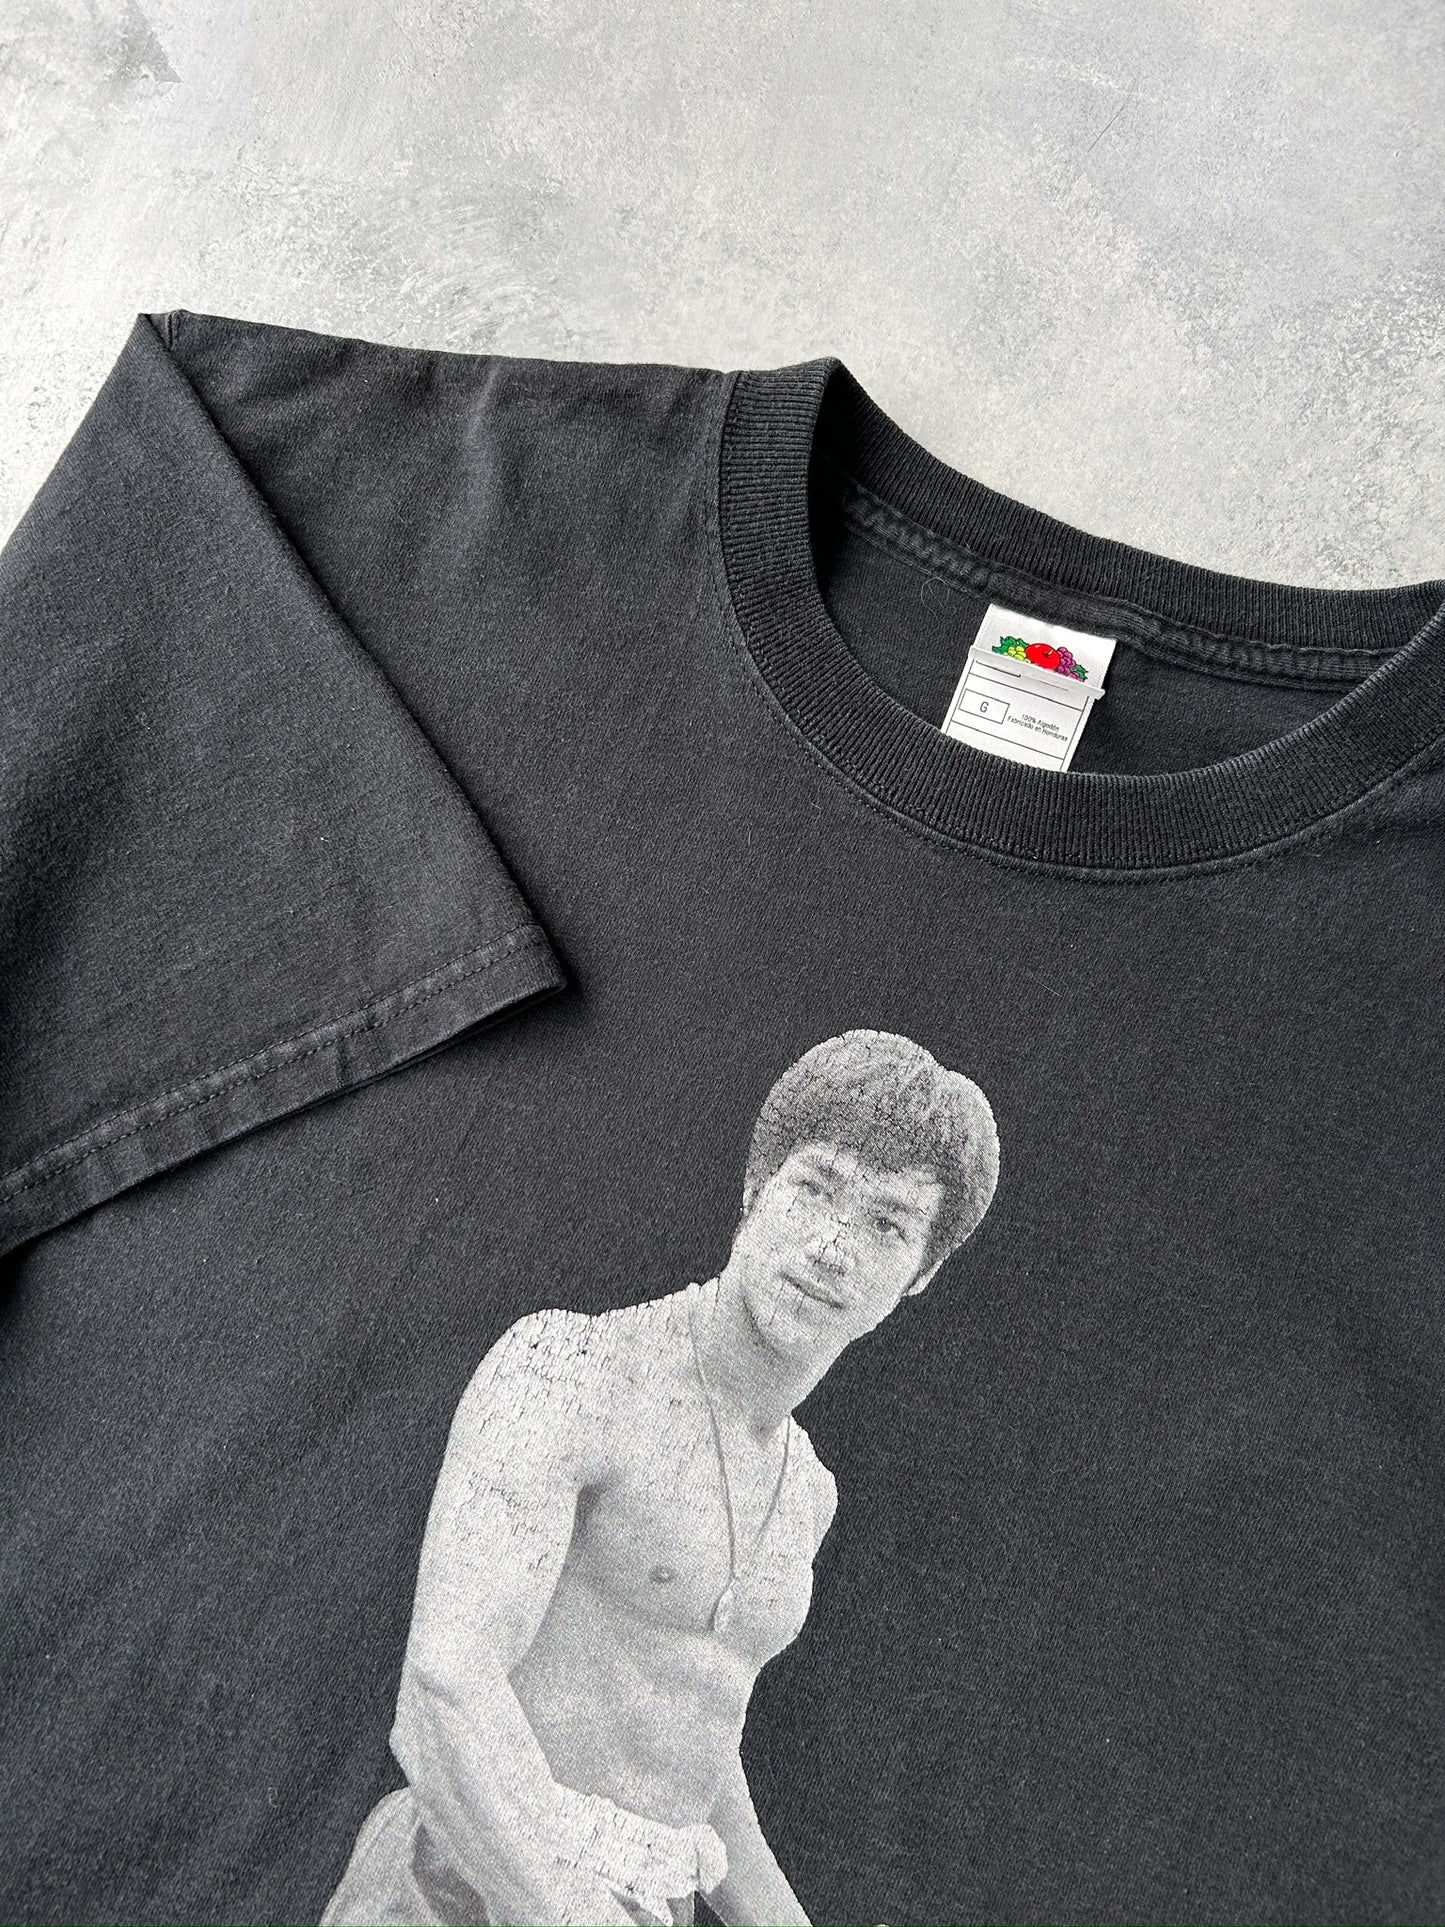 Bruce Lee T-Shirt 00's - Large